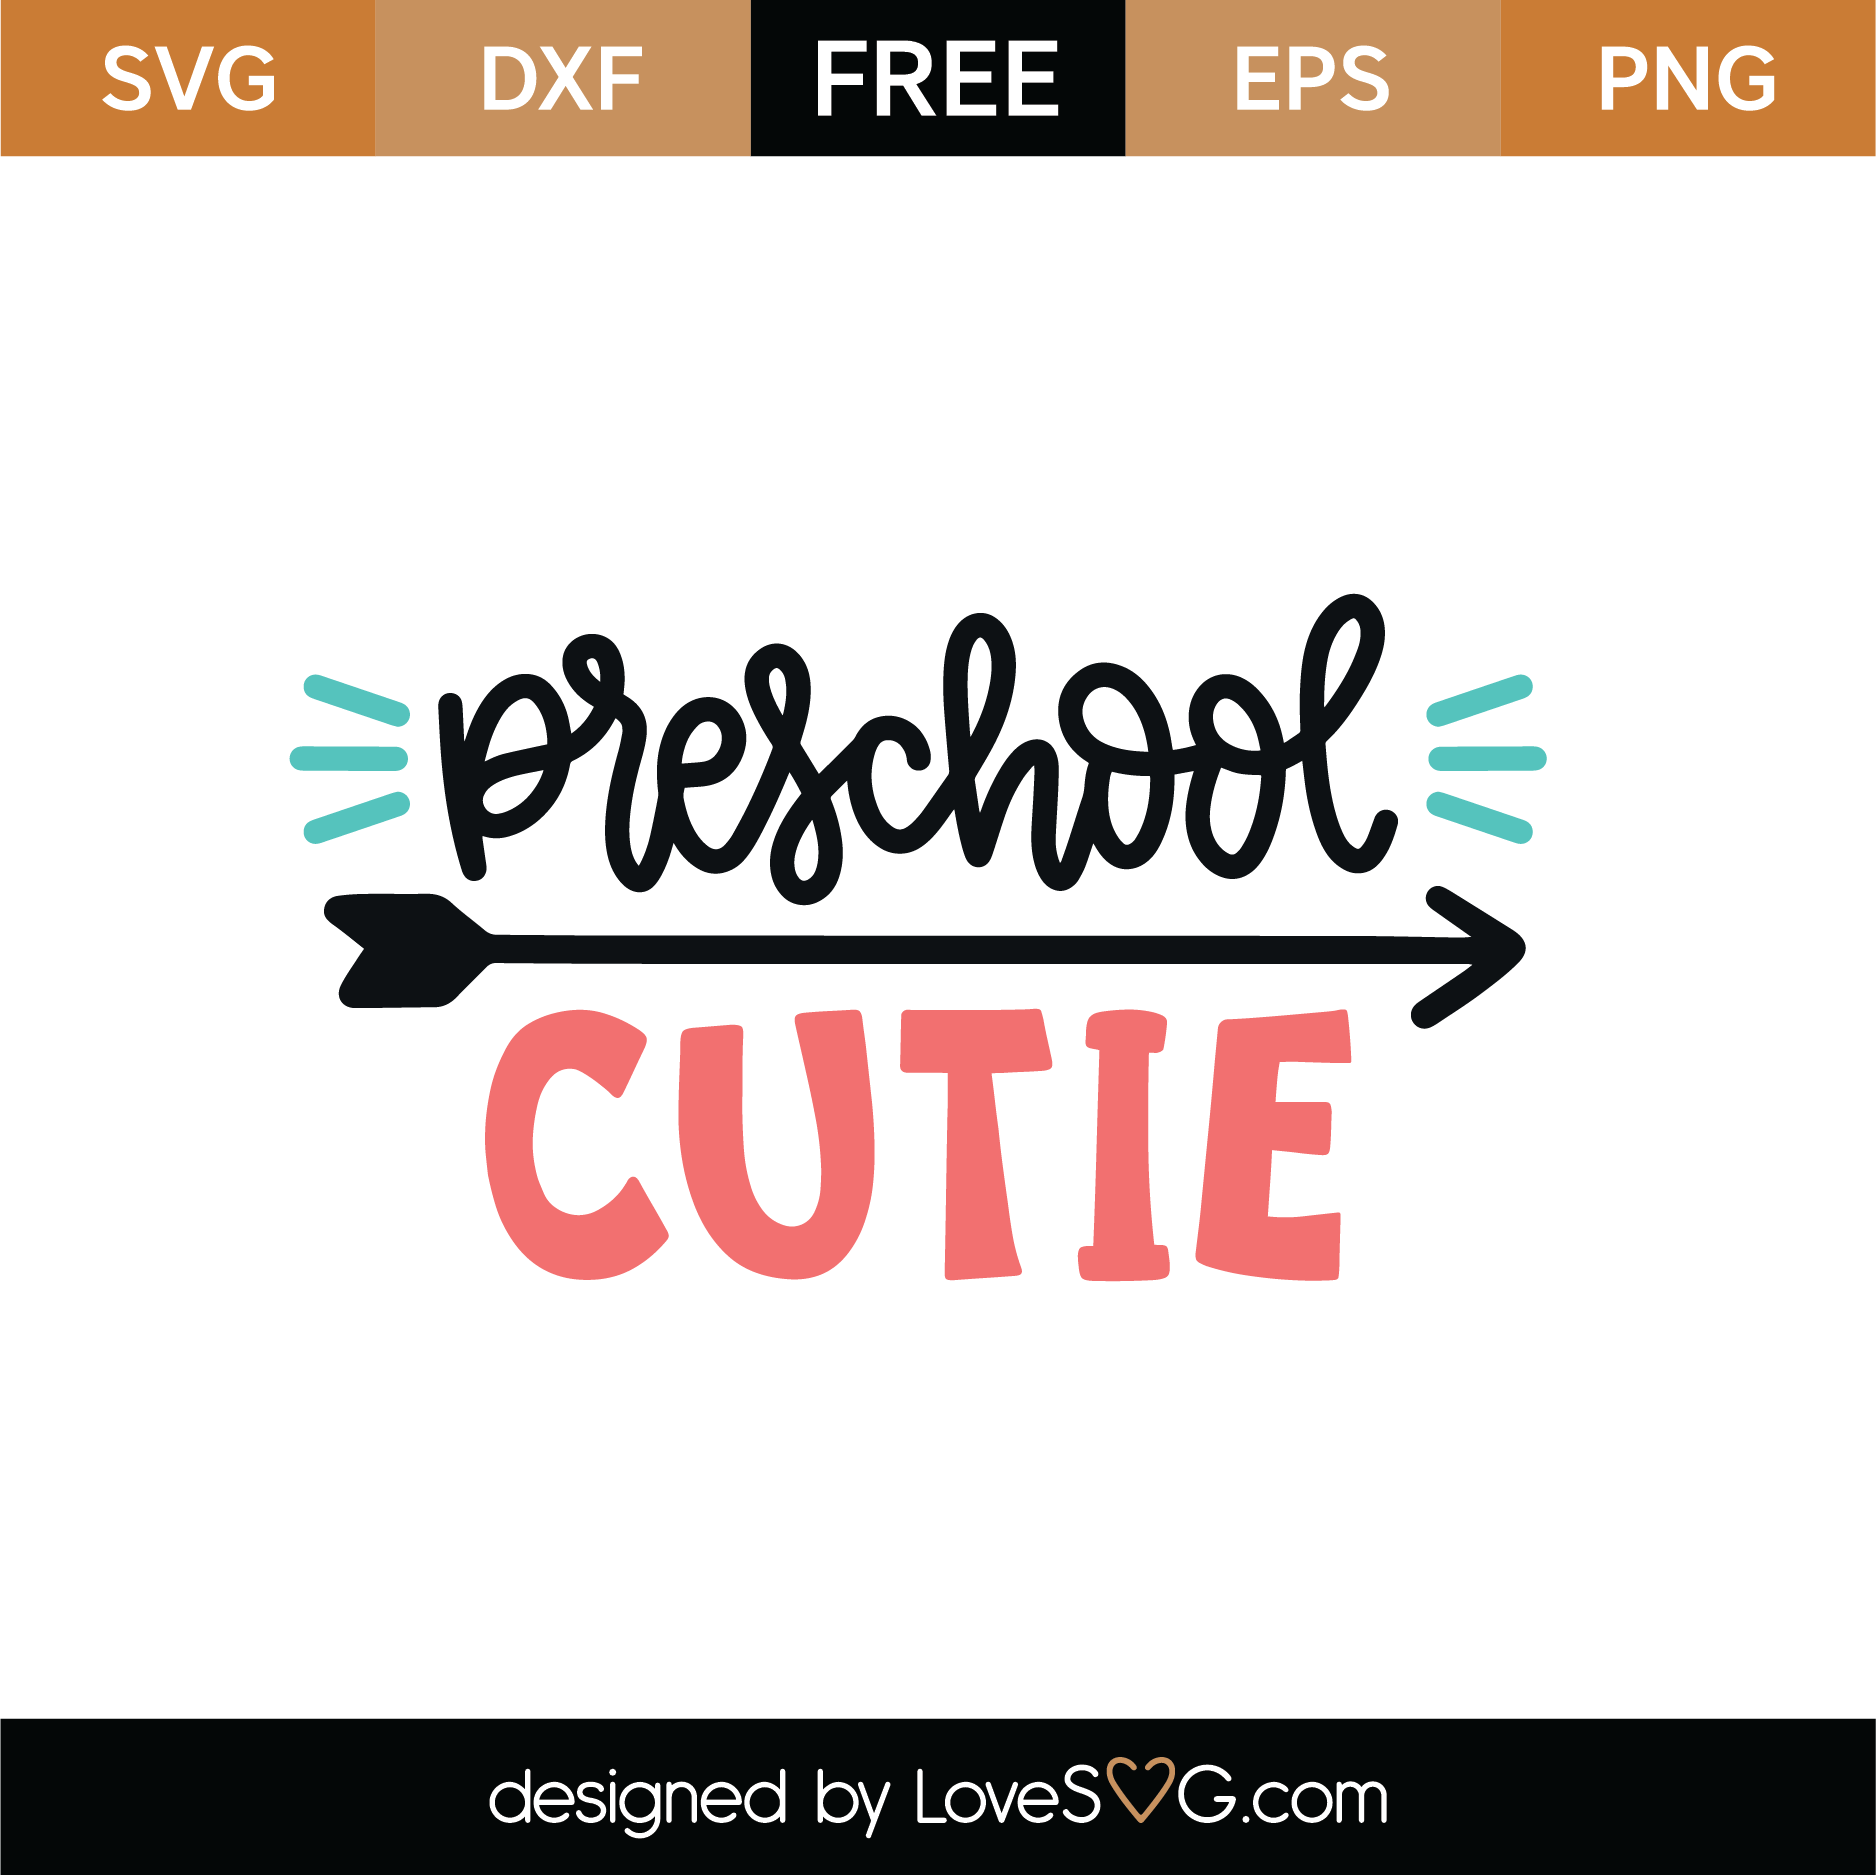 Free Preschool Cutie SVG Cut File | Lovesvg.com